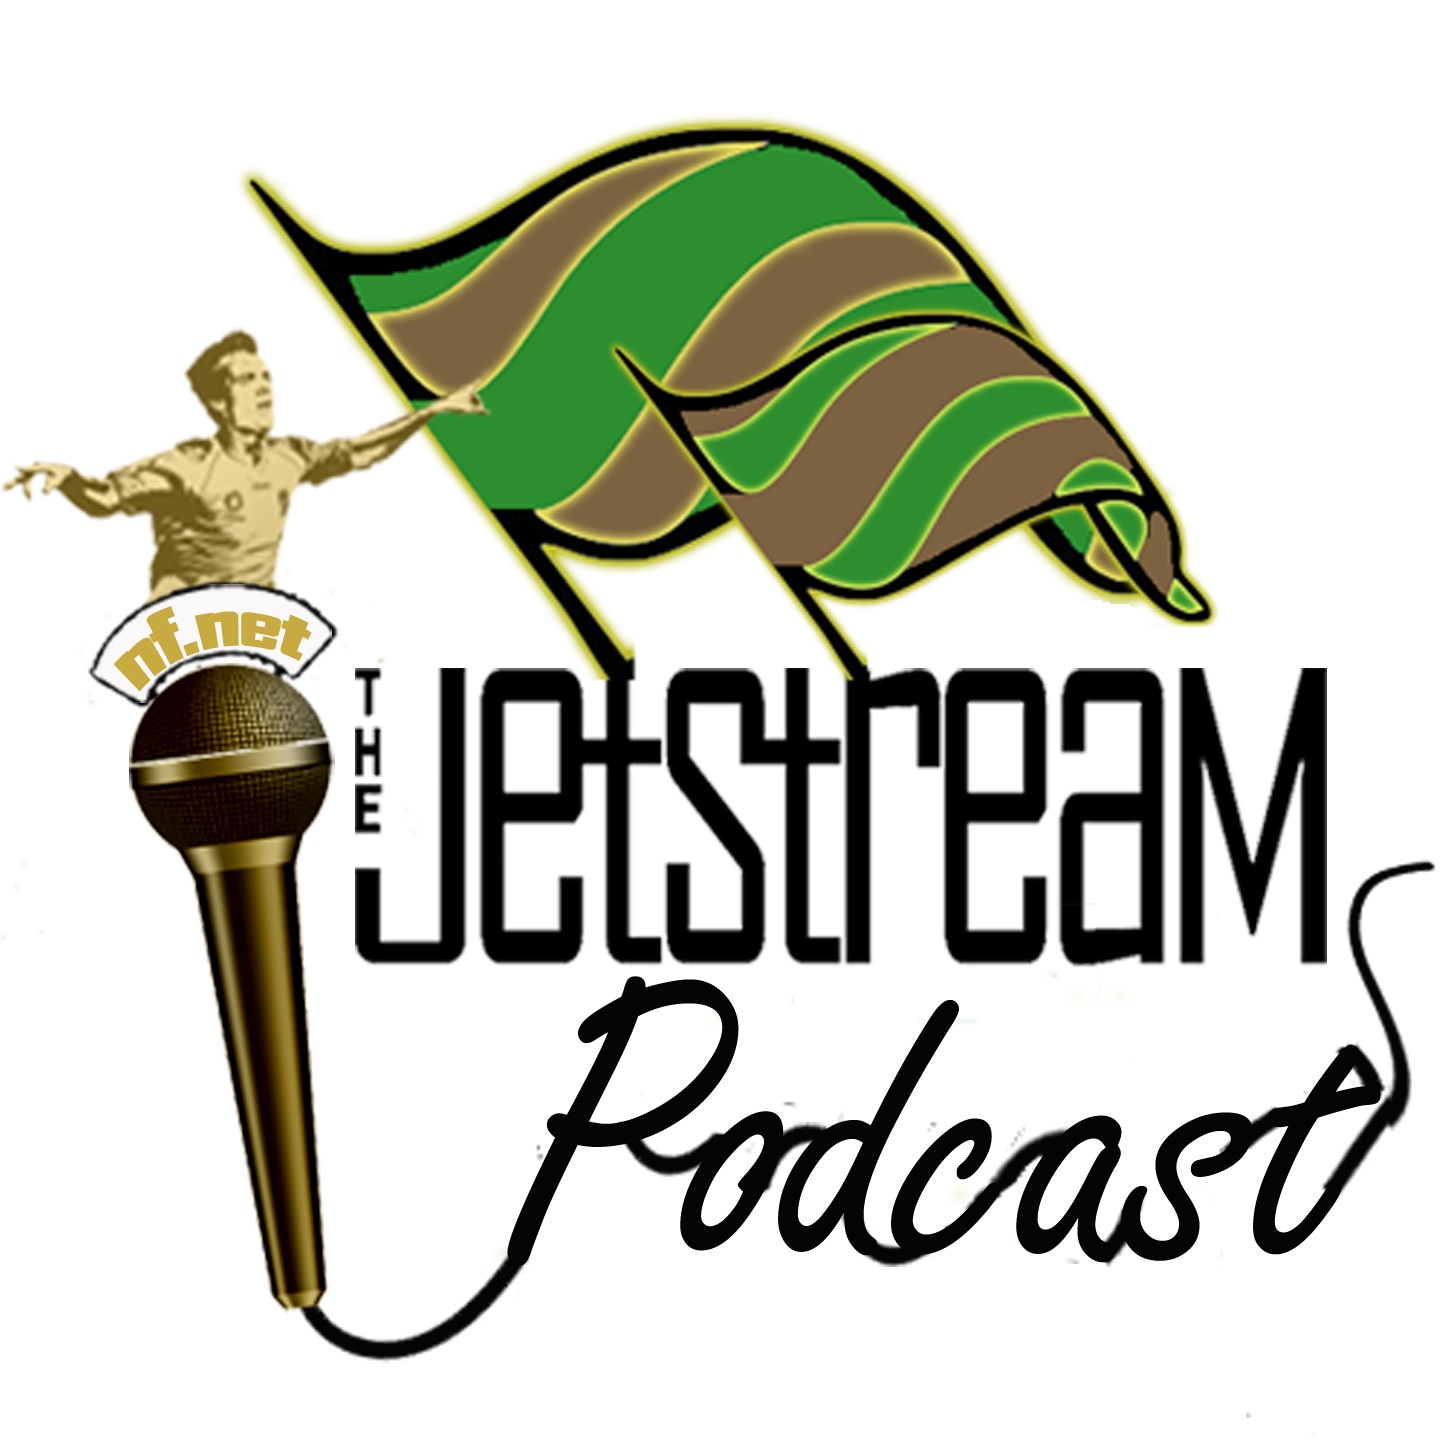 Jetstream_podcast_logo